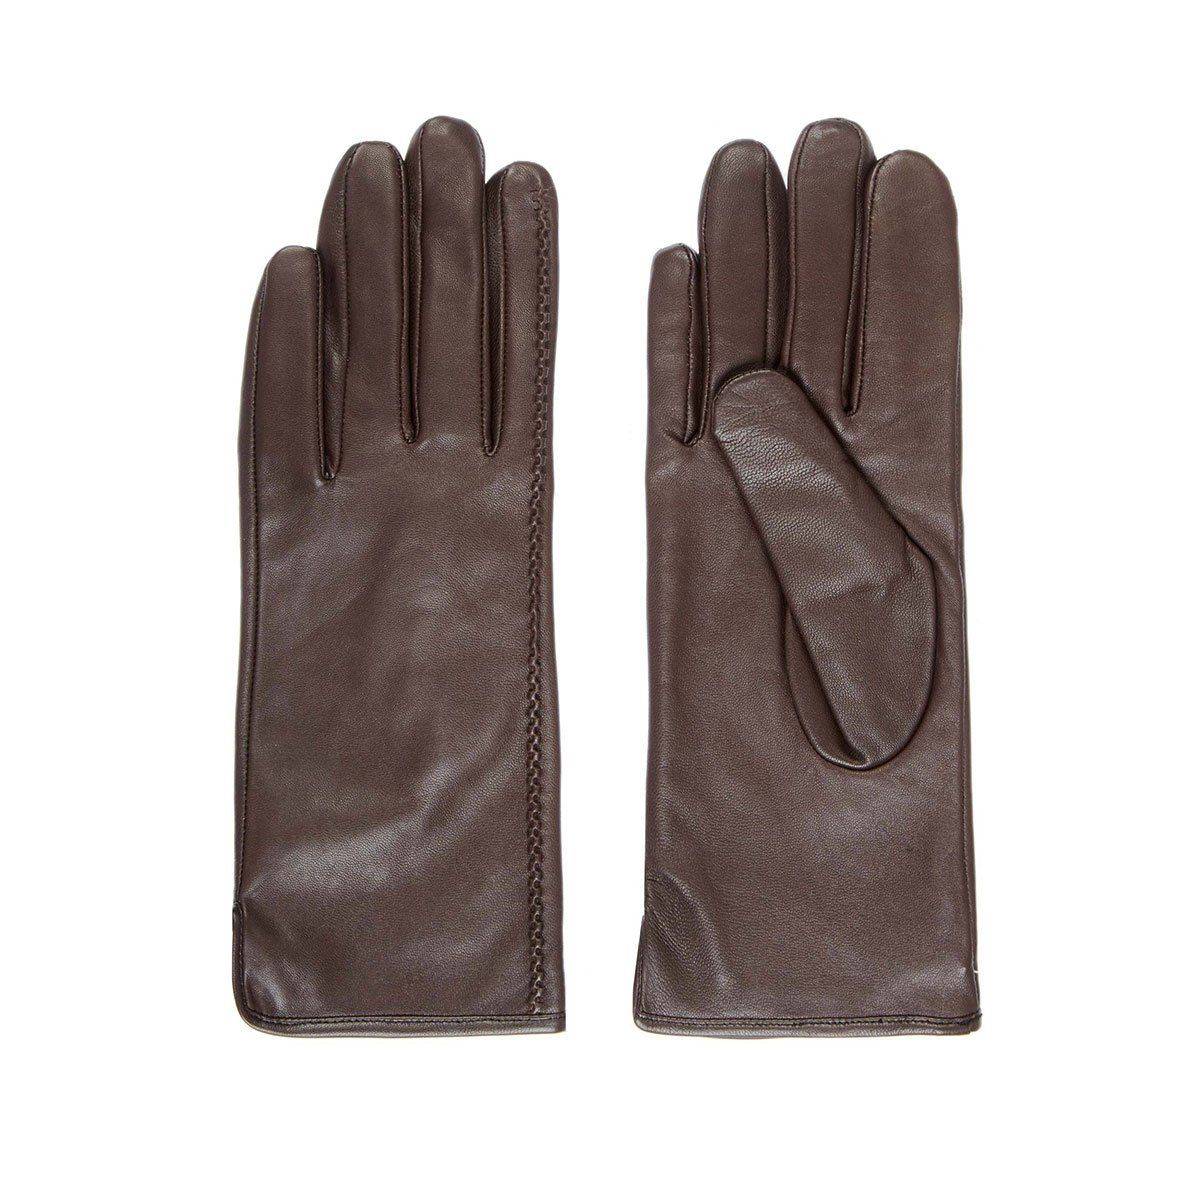 Перчатки EMU Australia ACCE - Accessories Moranbah Gloves W7006, цвет коричневый, размер XS/S - фото 1